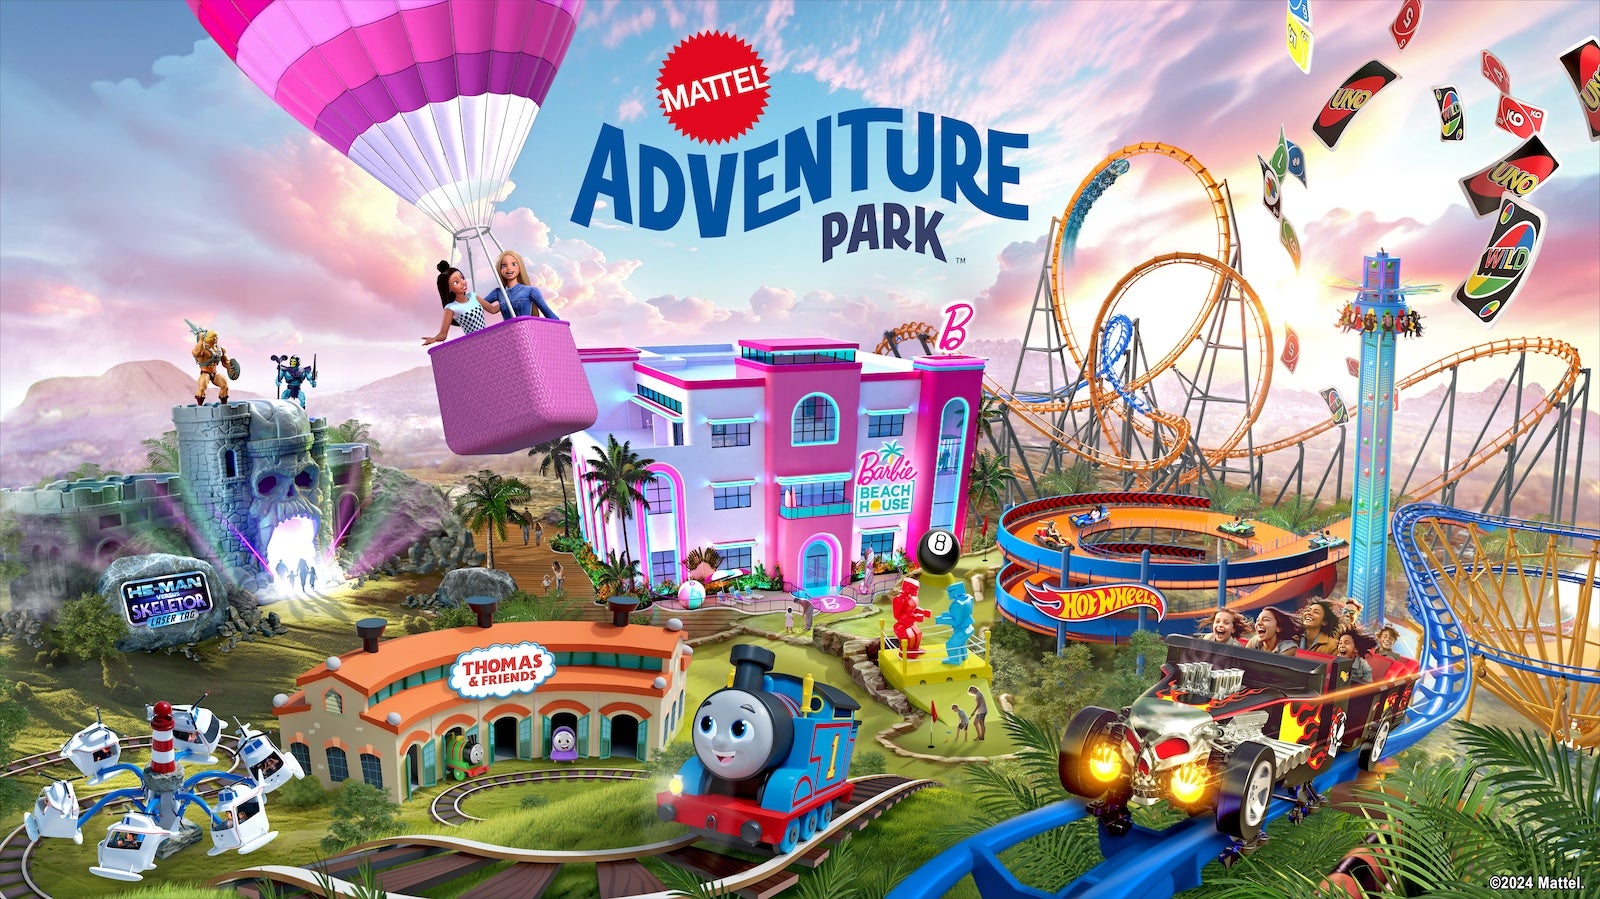 Second Mattel Journey Park coming to Kansas Metropolis in 2026